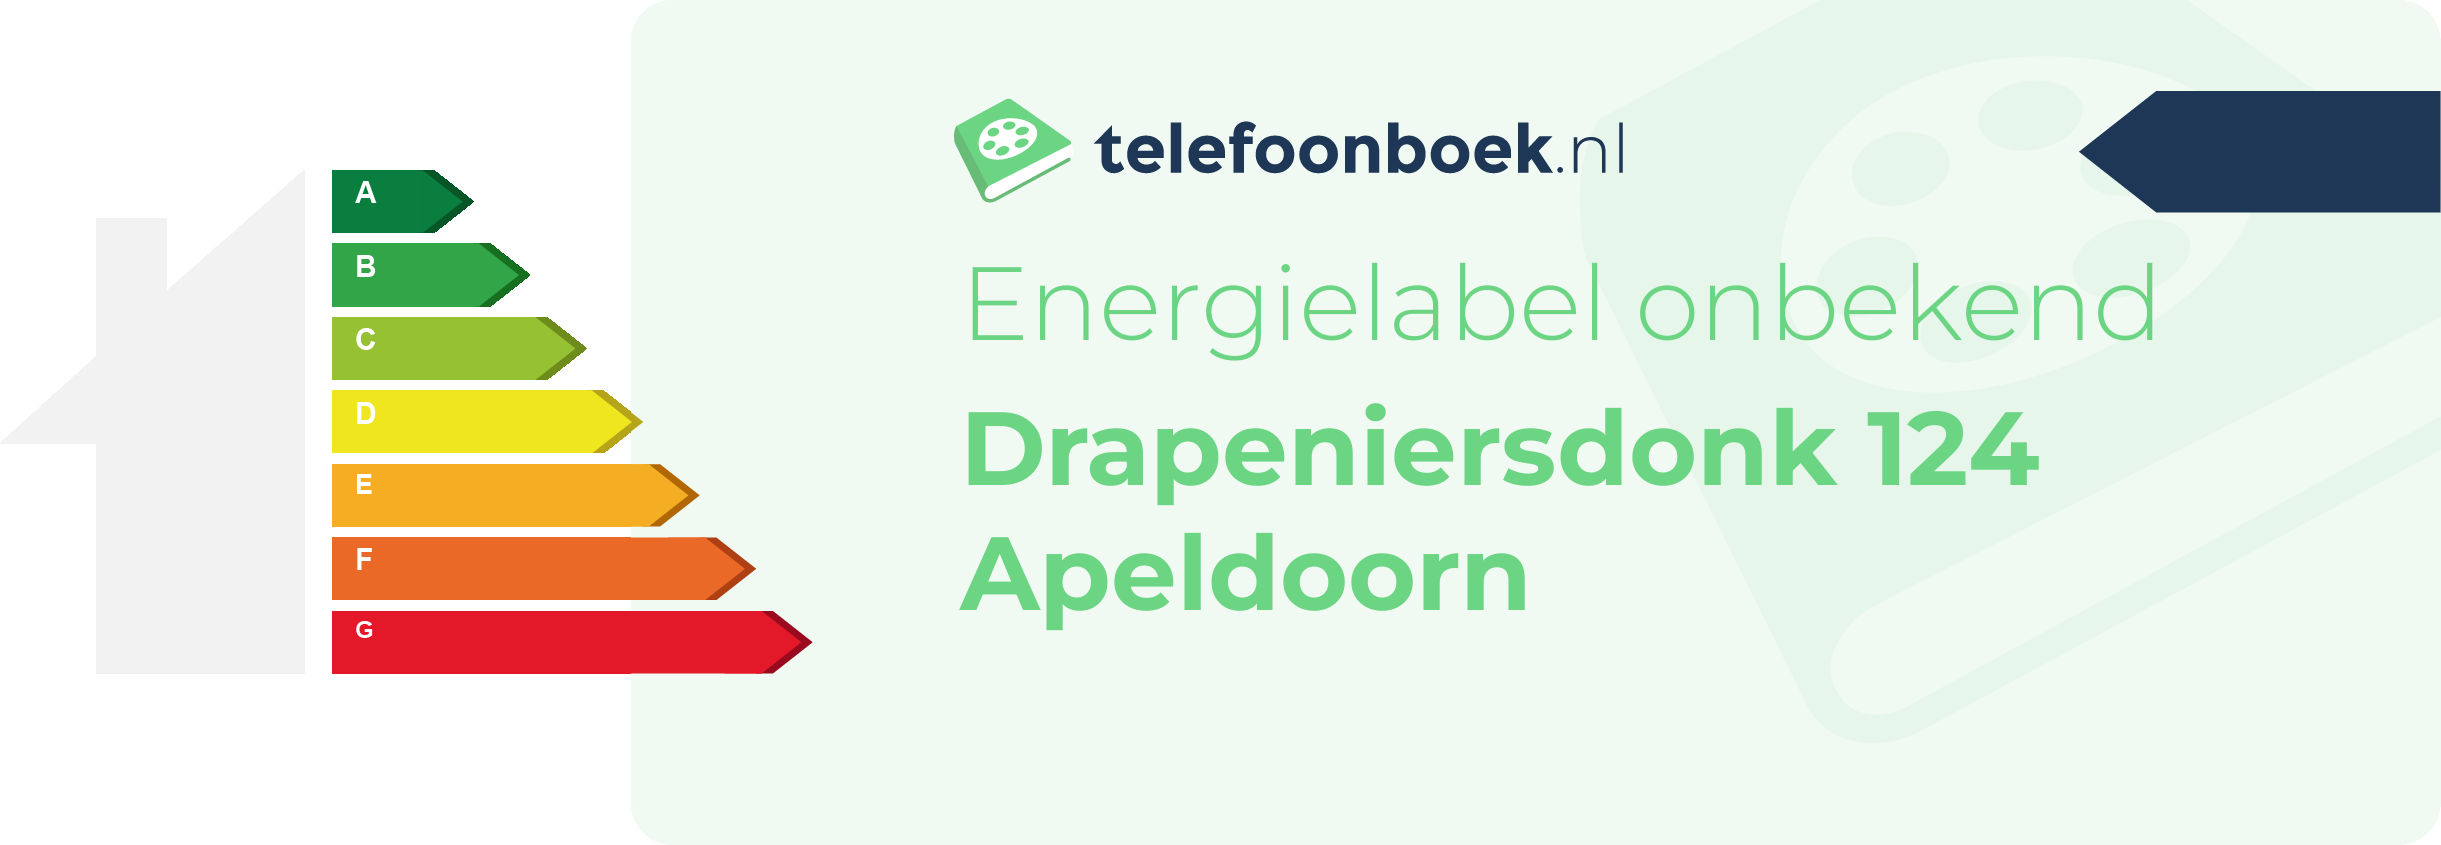 Energielabel Drapeniersdonk 124 Apeldoorn